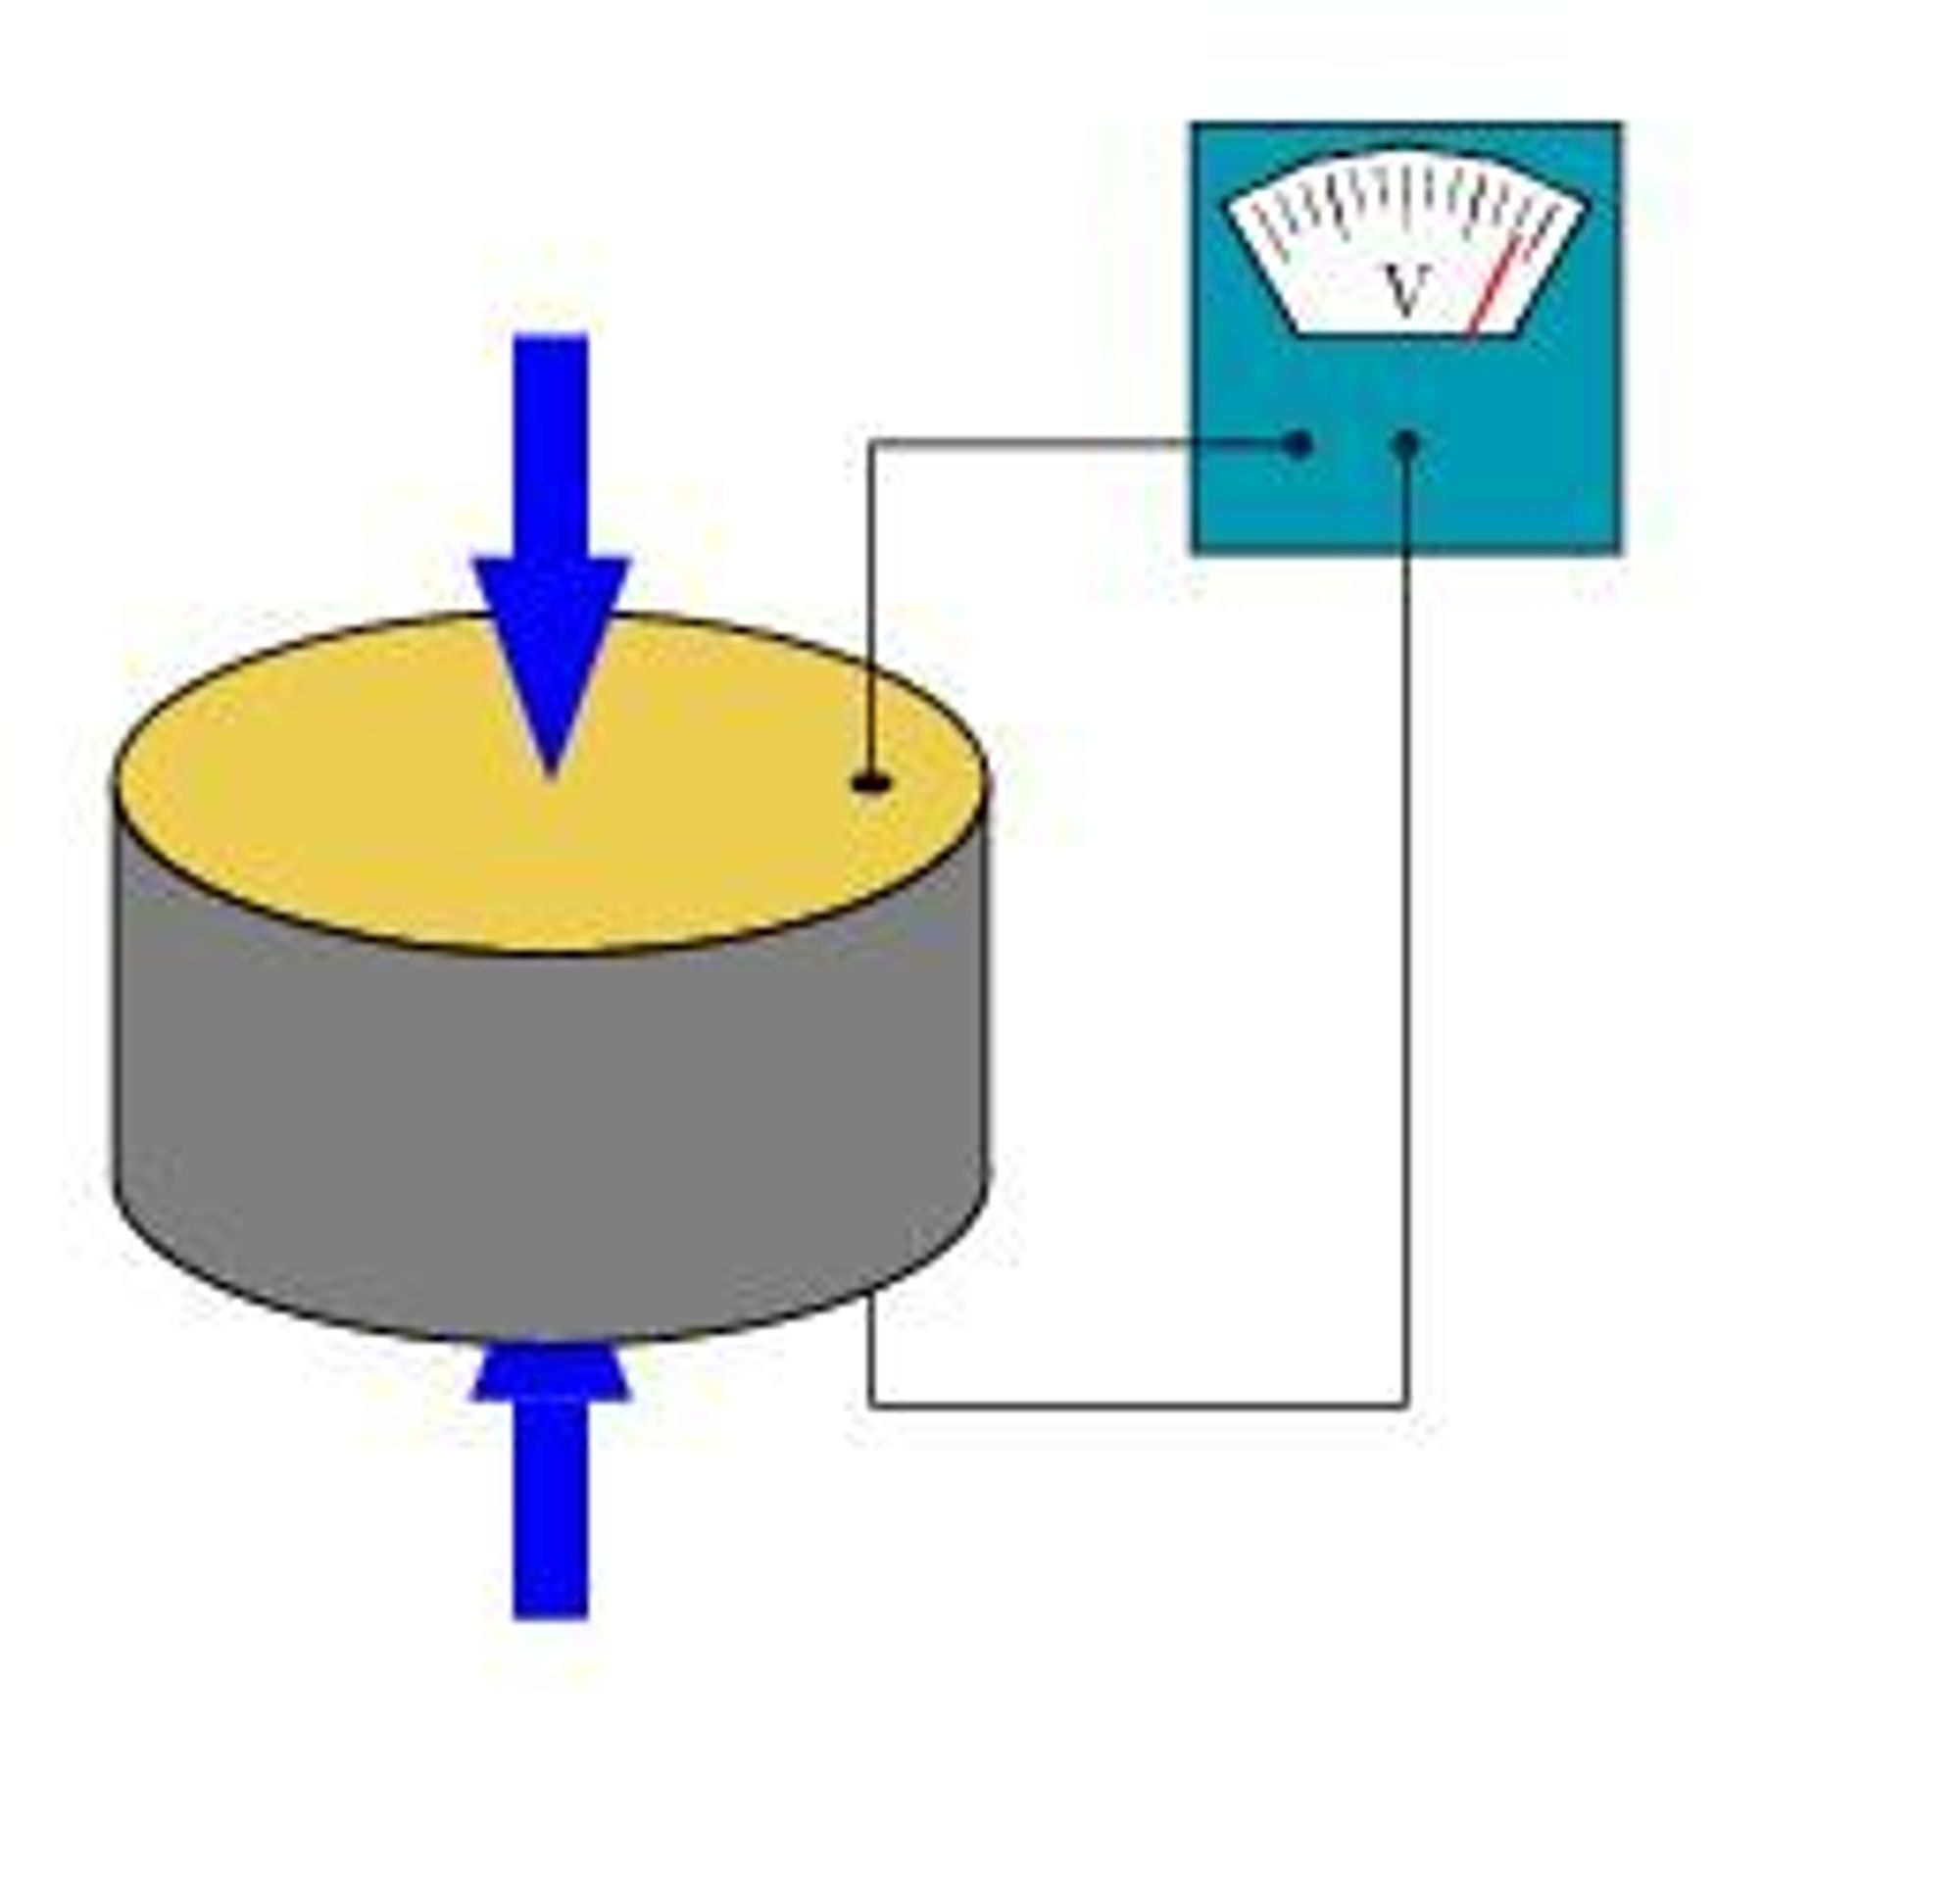 Når piezoelektriske materialer trykkes sammen, genereres en spenning.